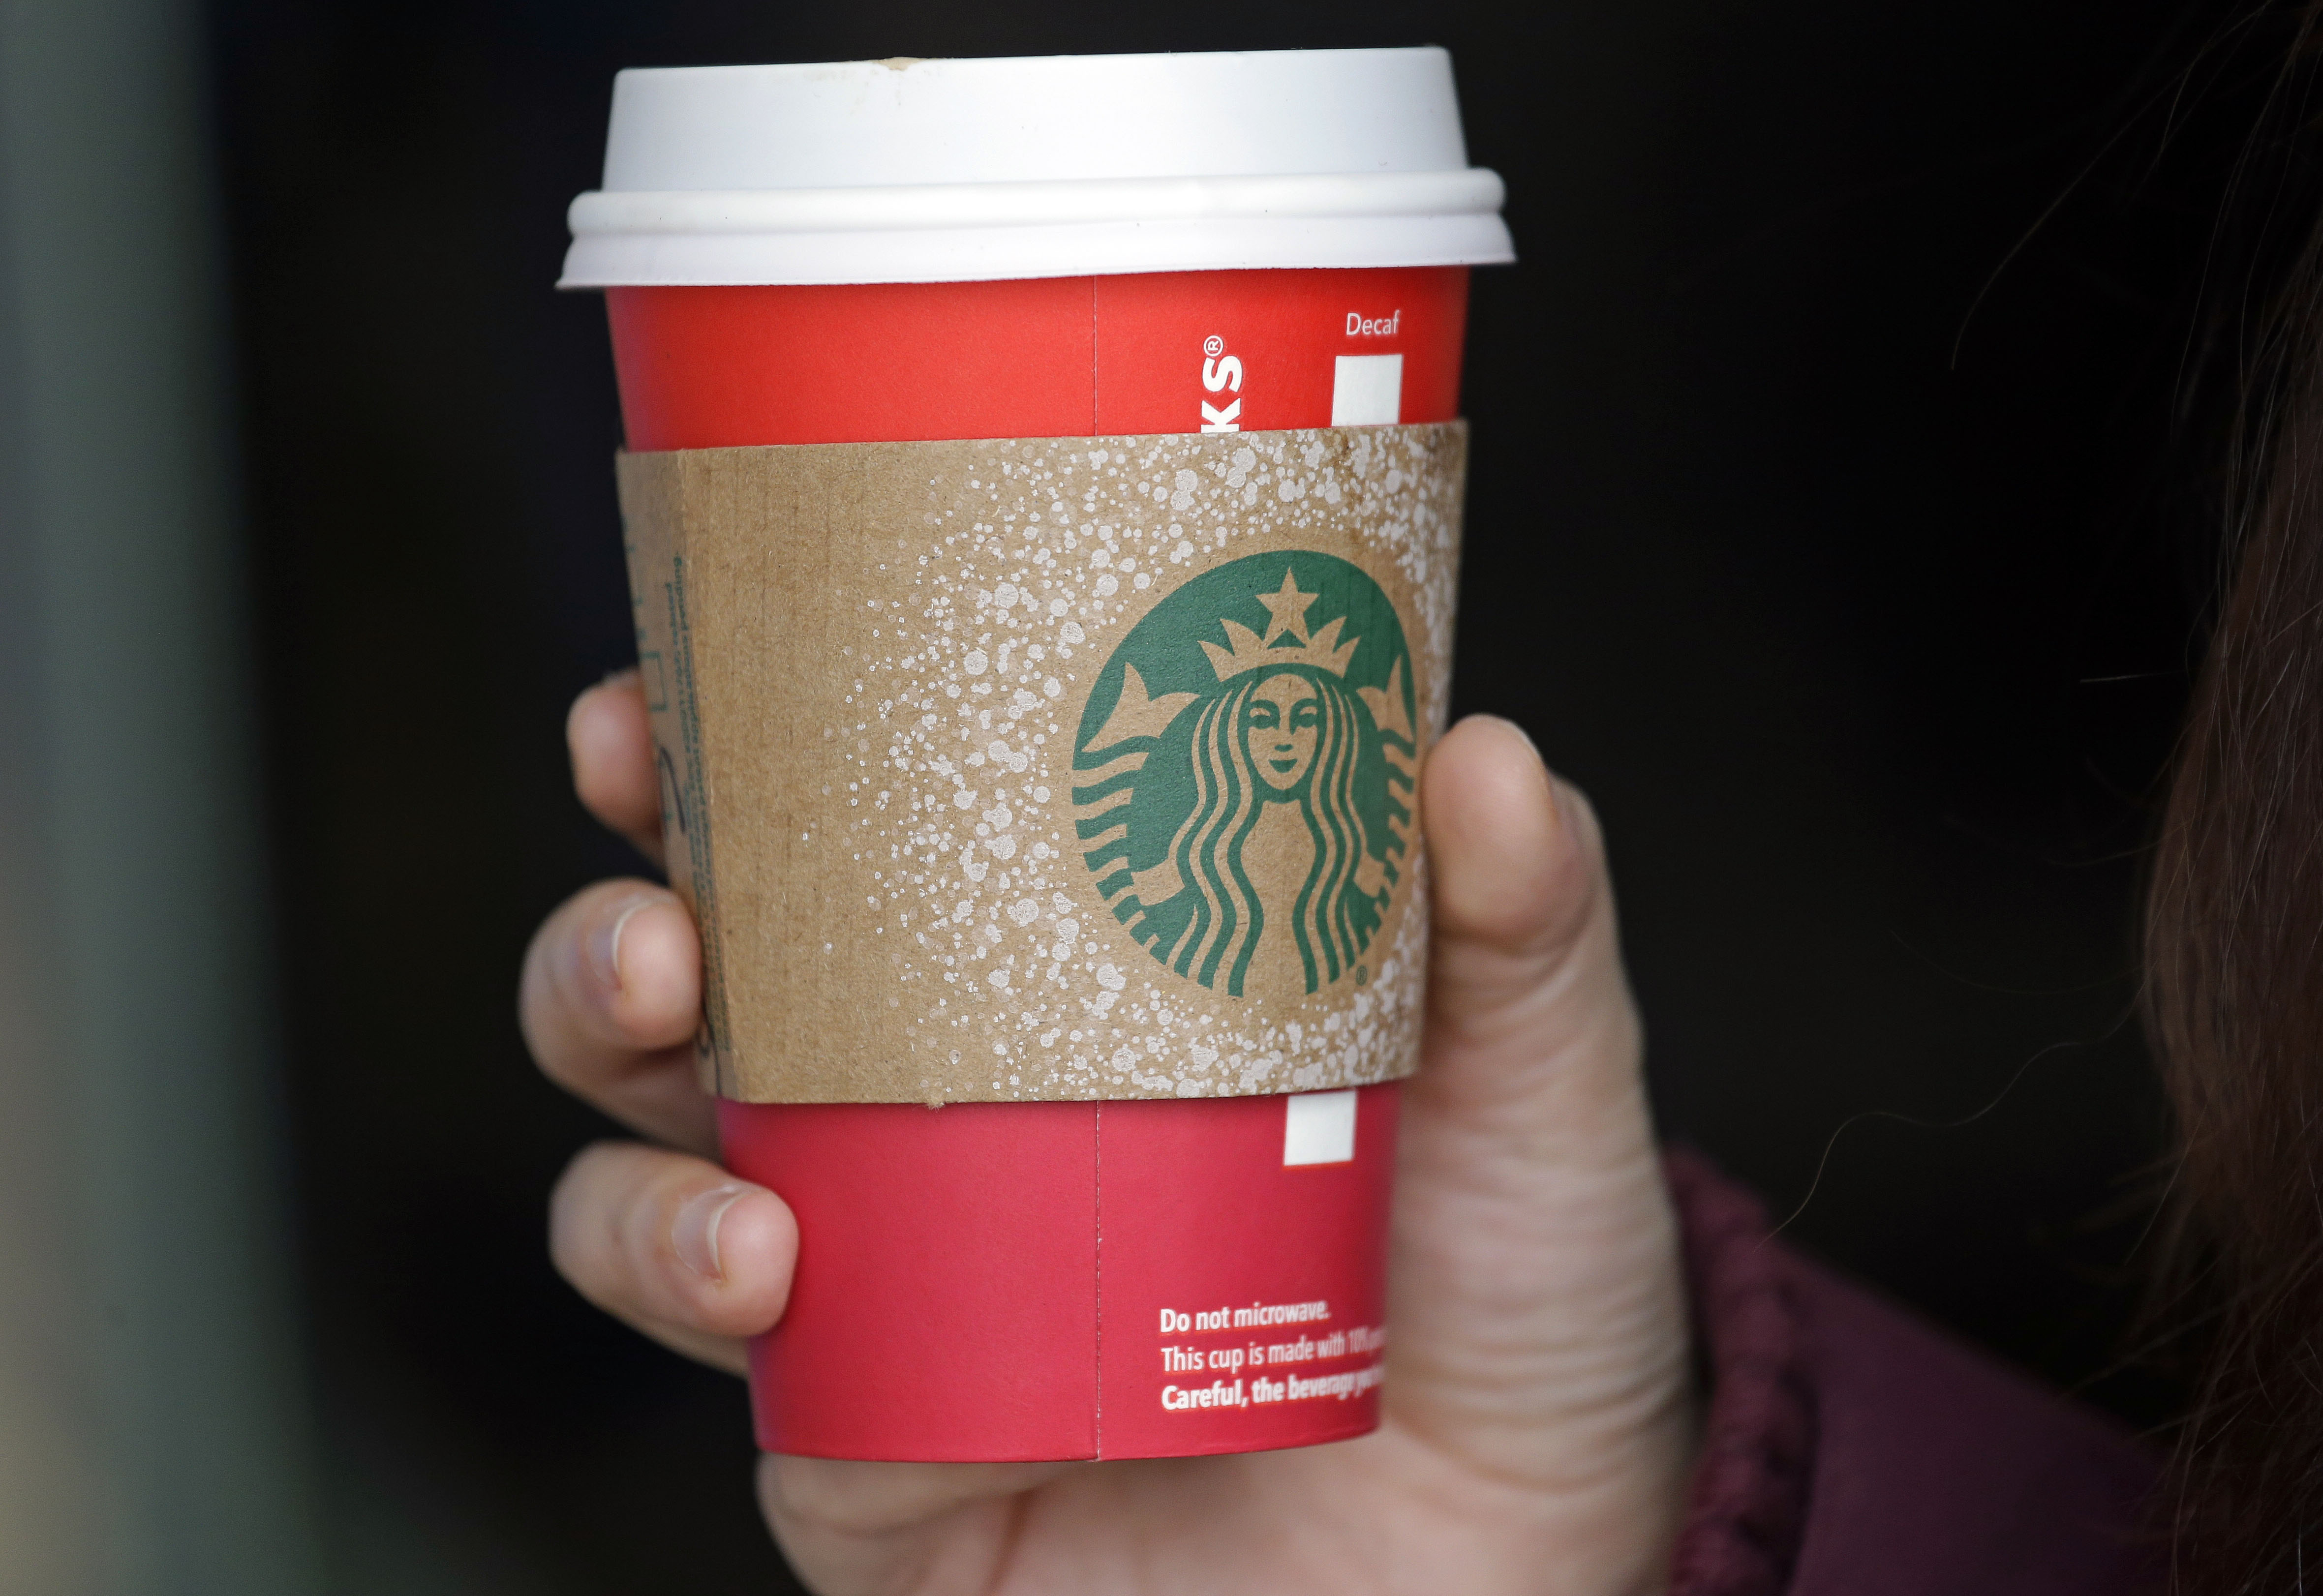 http://www.duqsm.com/wp-content/uploads/2015/11/Starbucks-War-on-Chri_Kerl.jpg